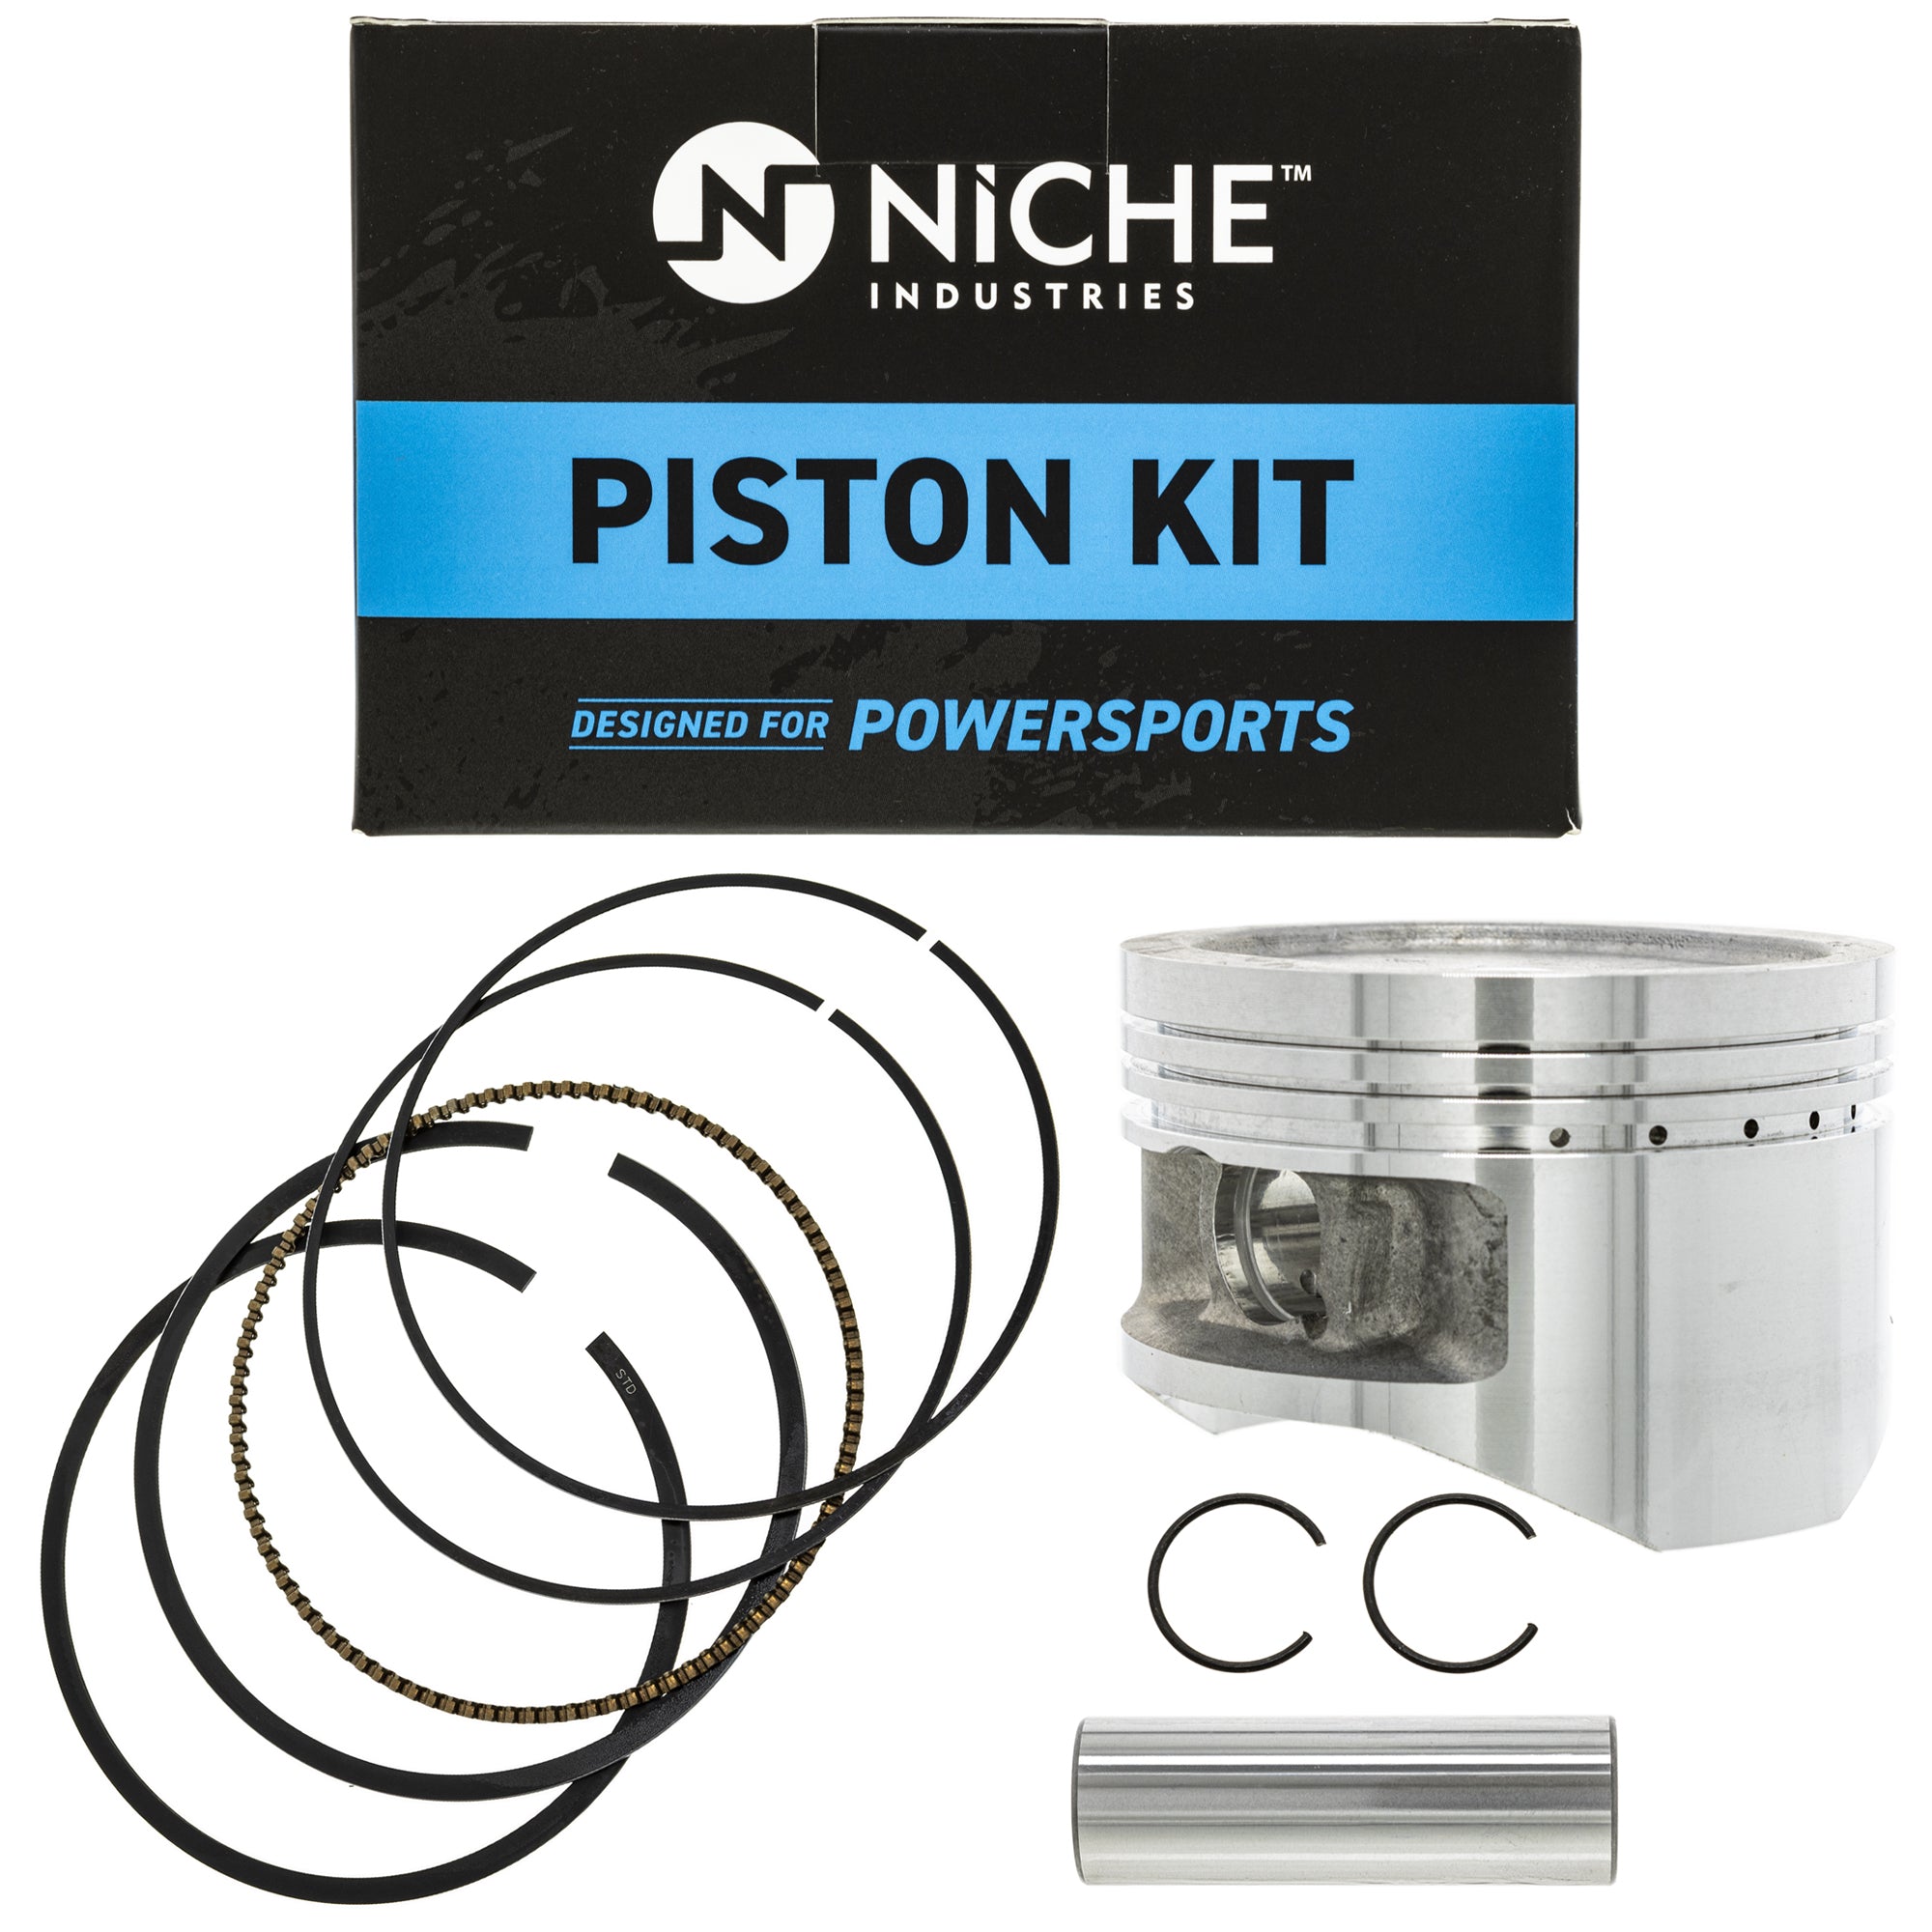 NICHE Piston Kit